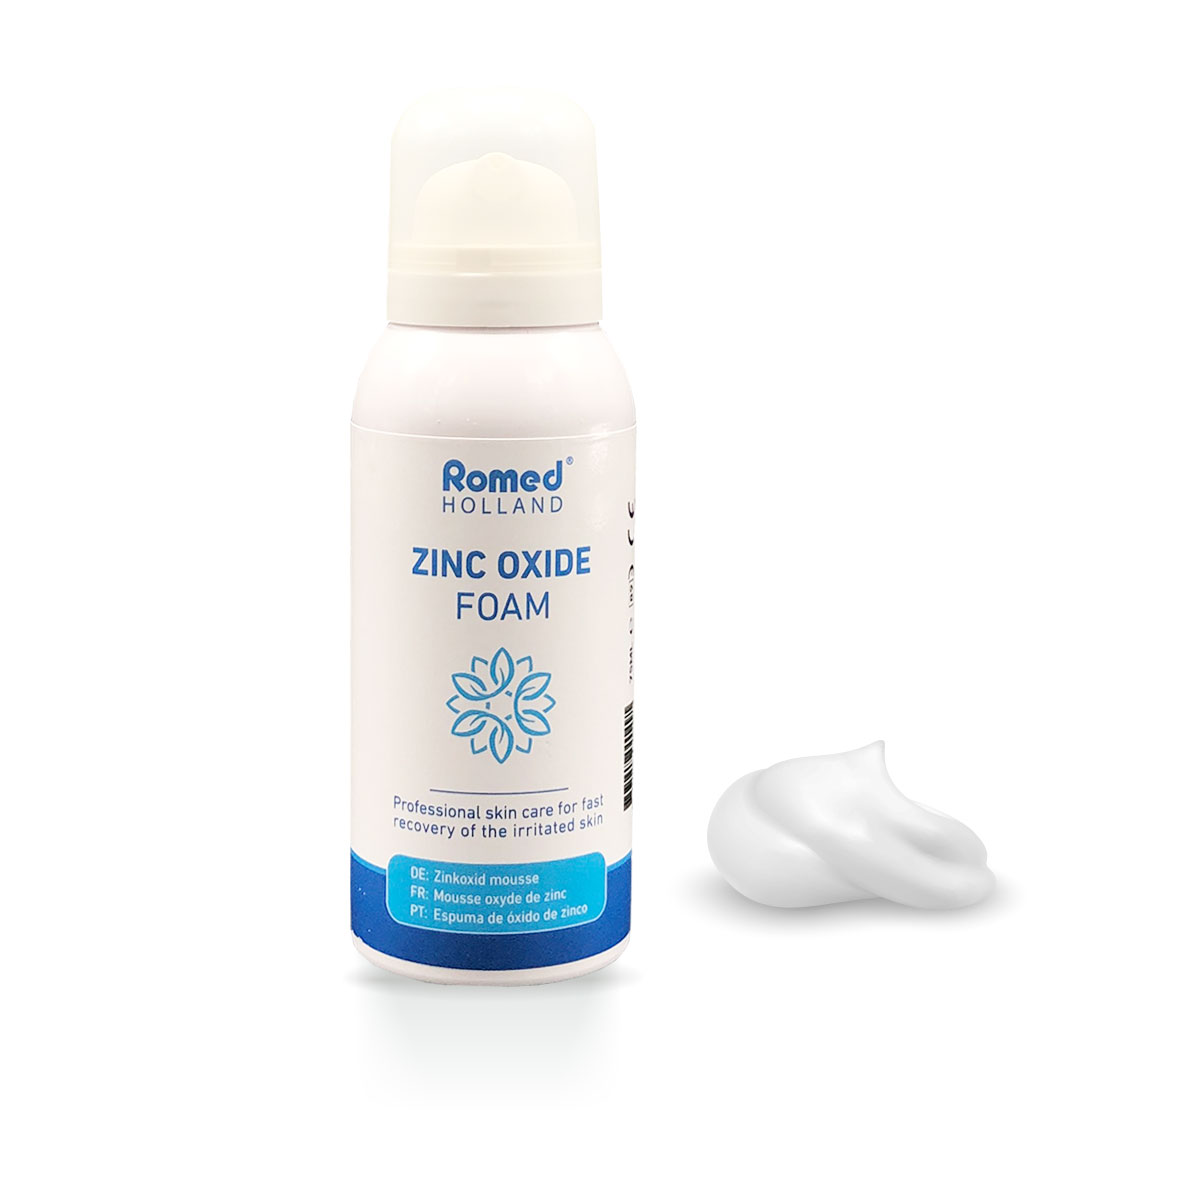 ZINC-125 Espuma de óxido de zinco Romed, 125 ml, 12 unid. por caixa de envio.